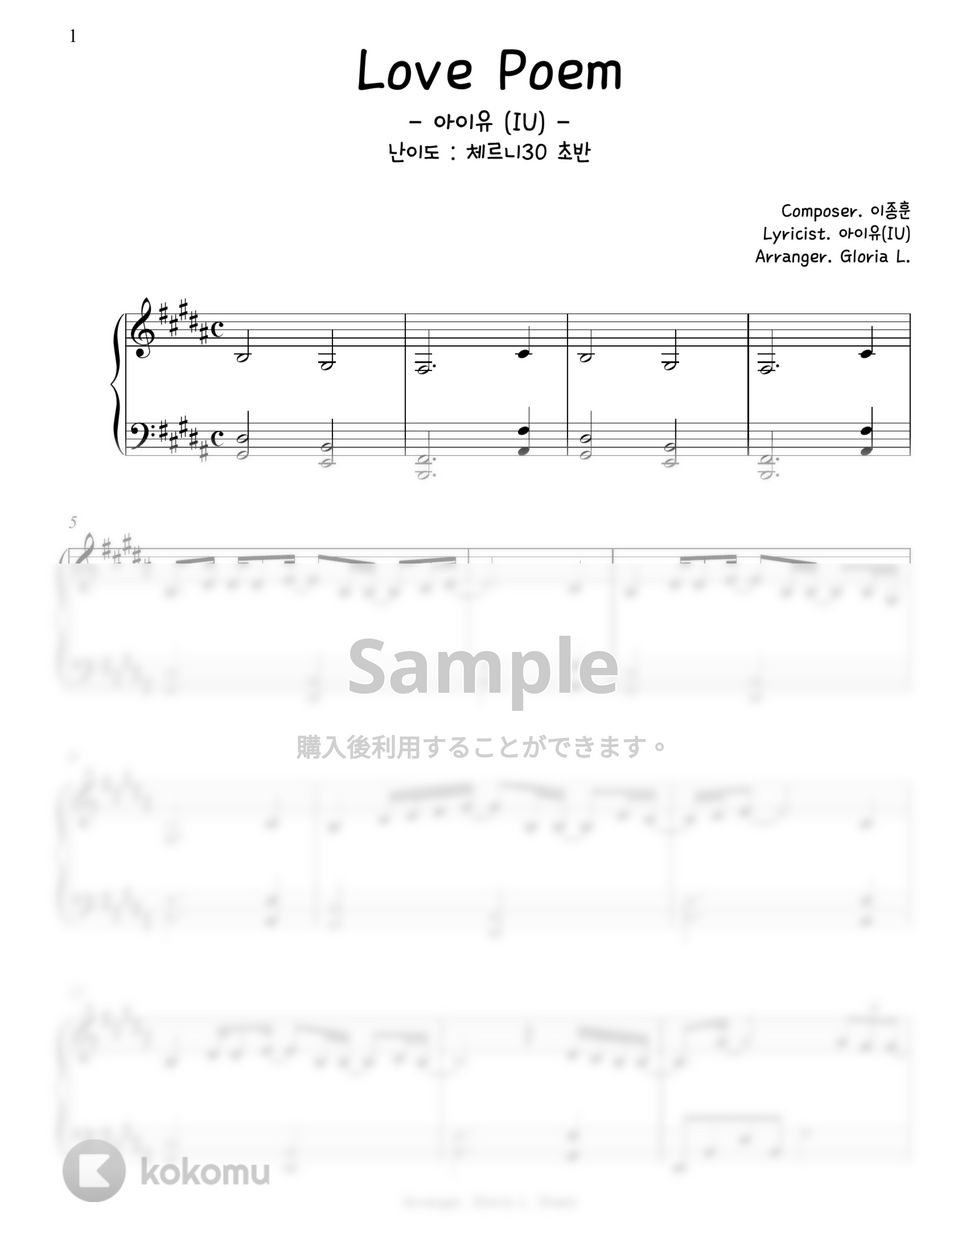 IU - Love Poem (難易度:チェルニー30前半) by Gloria L.